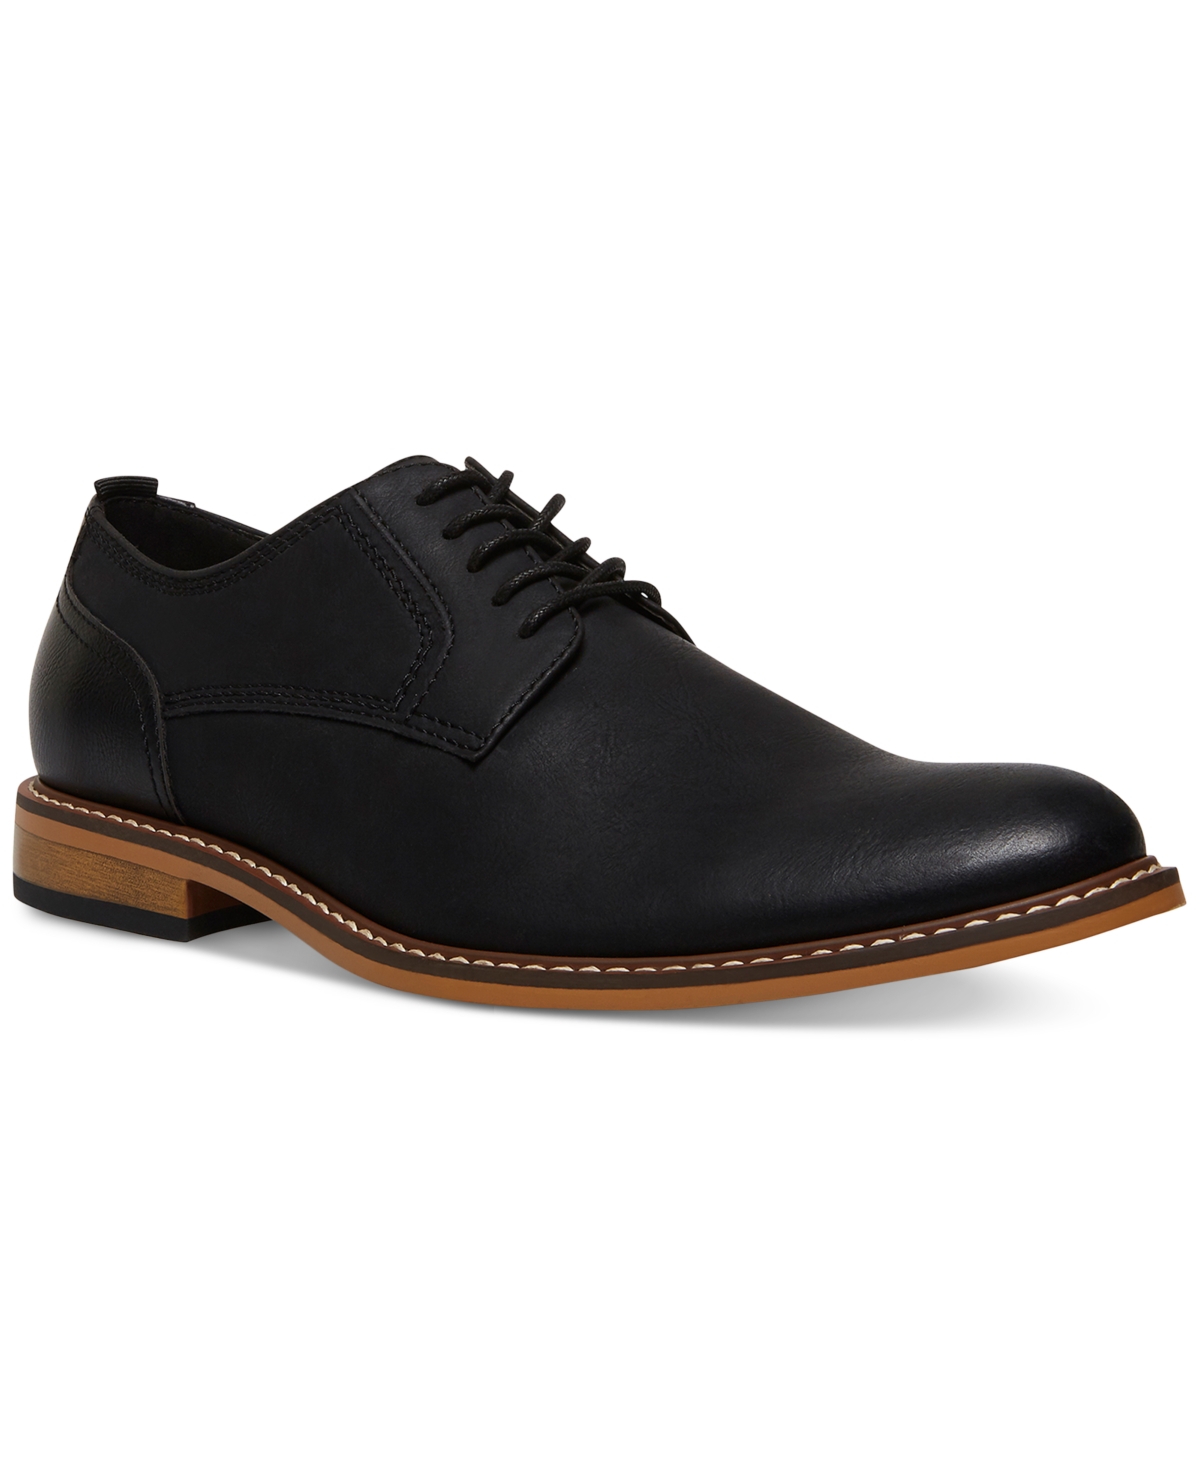 Men's Allou Oxford Dress Shoe - Black Nubuck